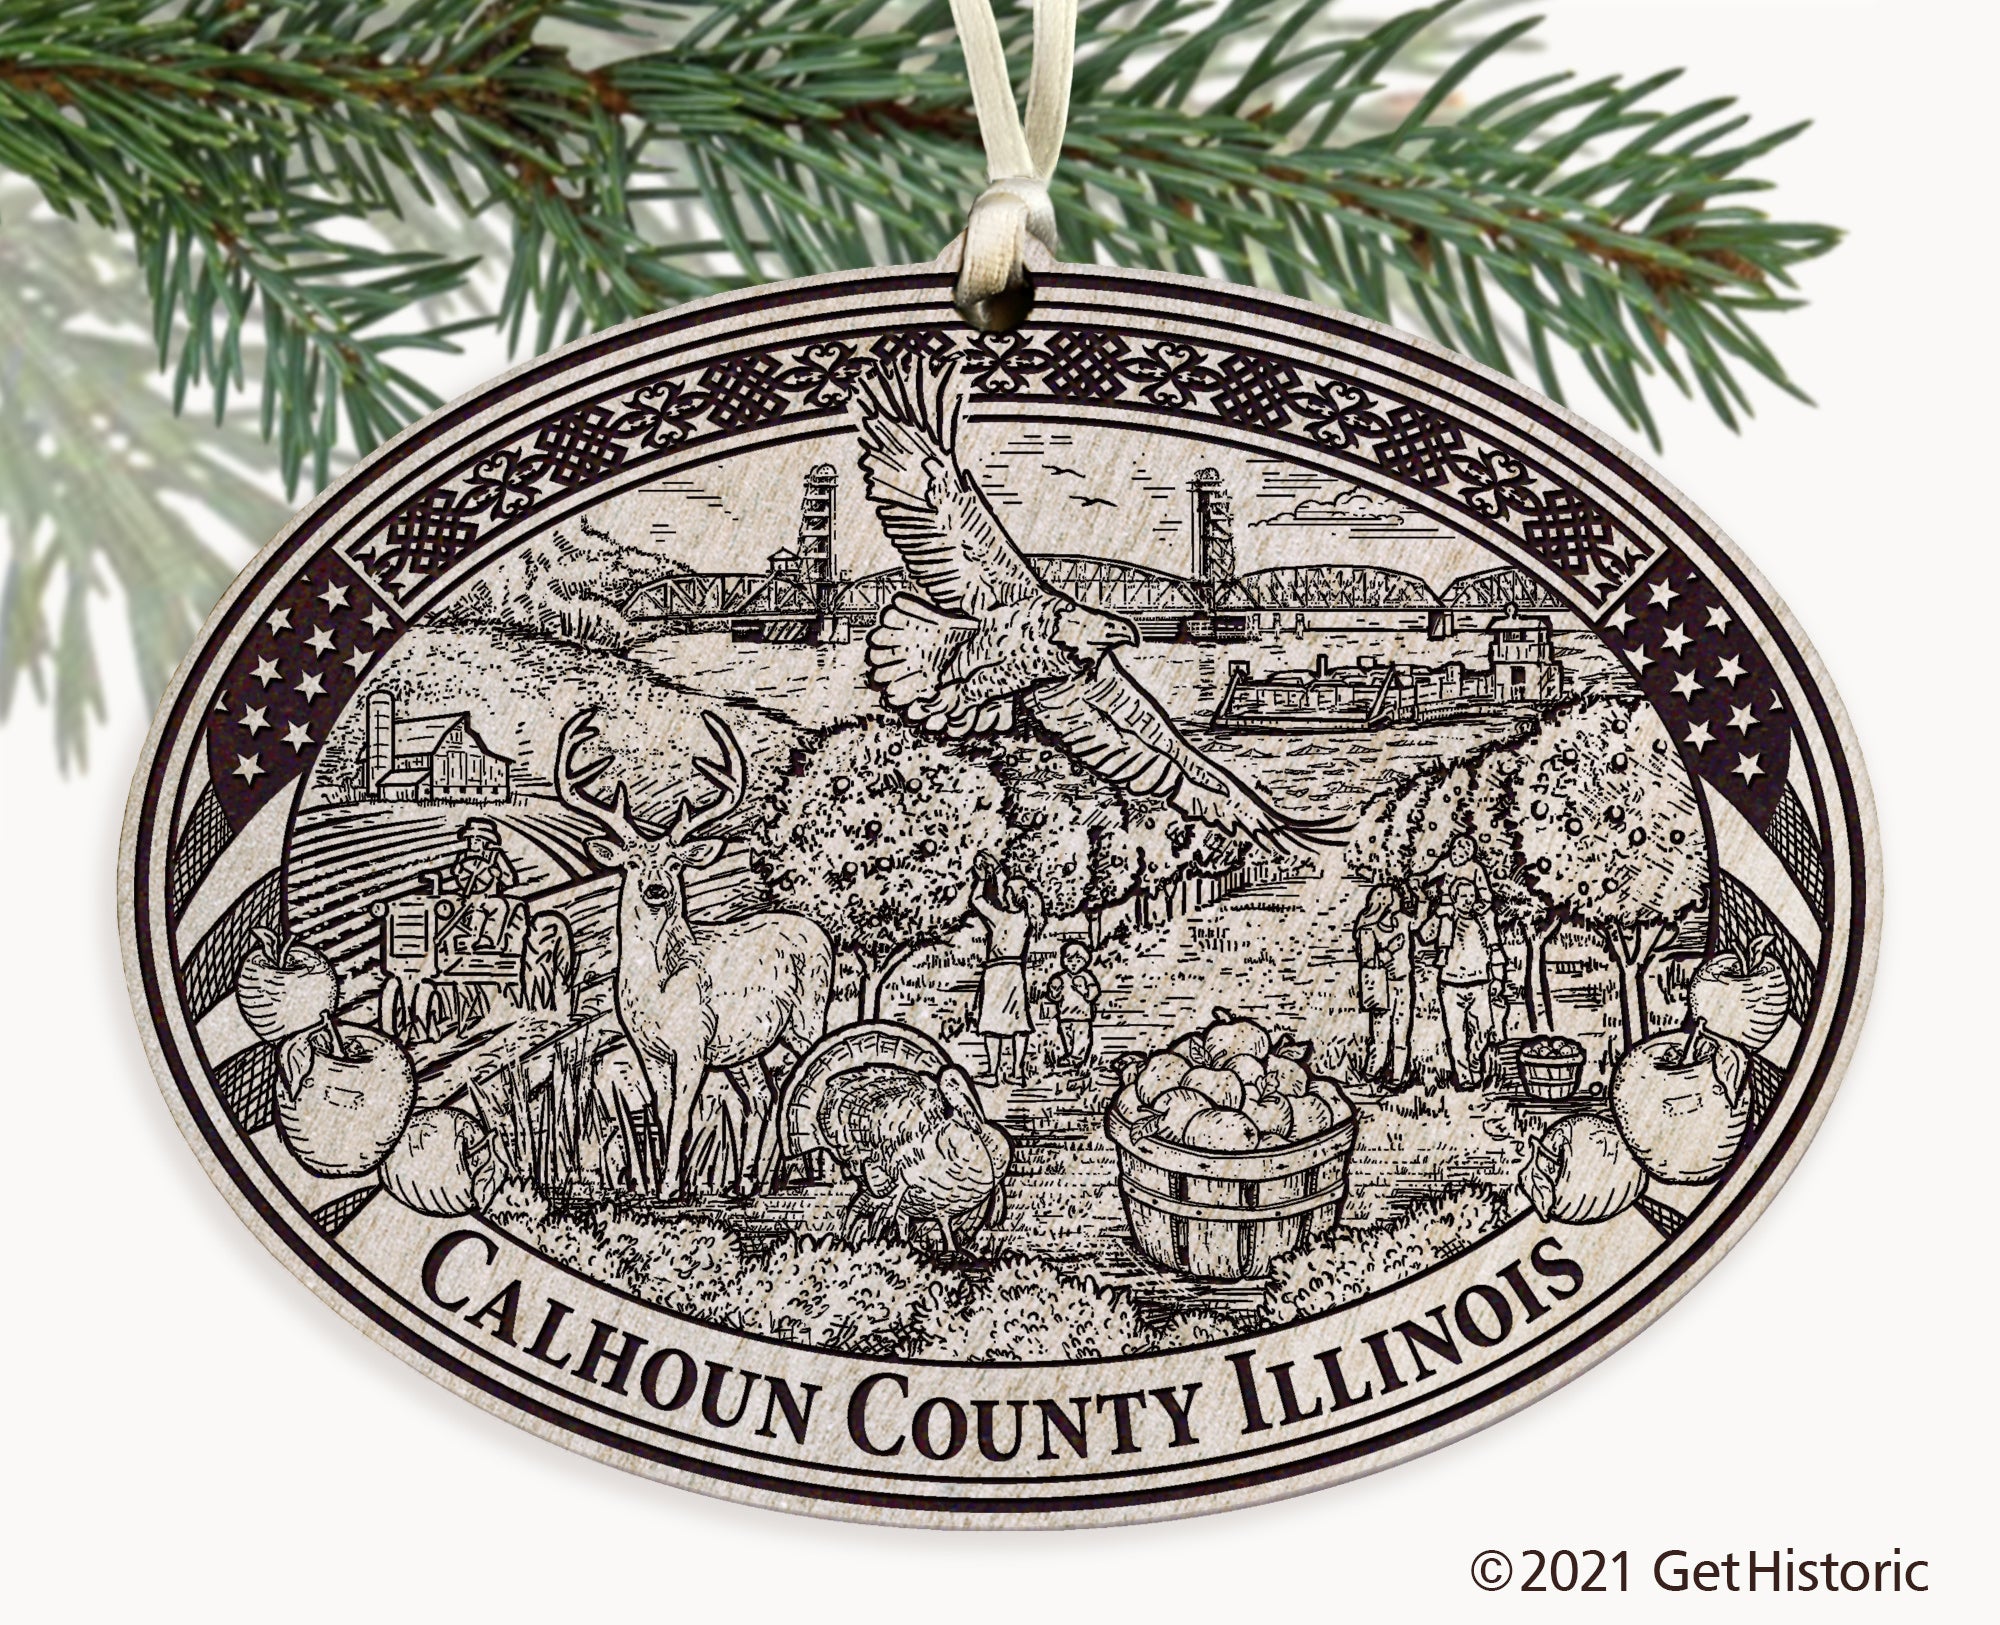 Calhoun County Illinois Engraved Ornament